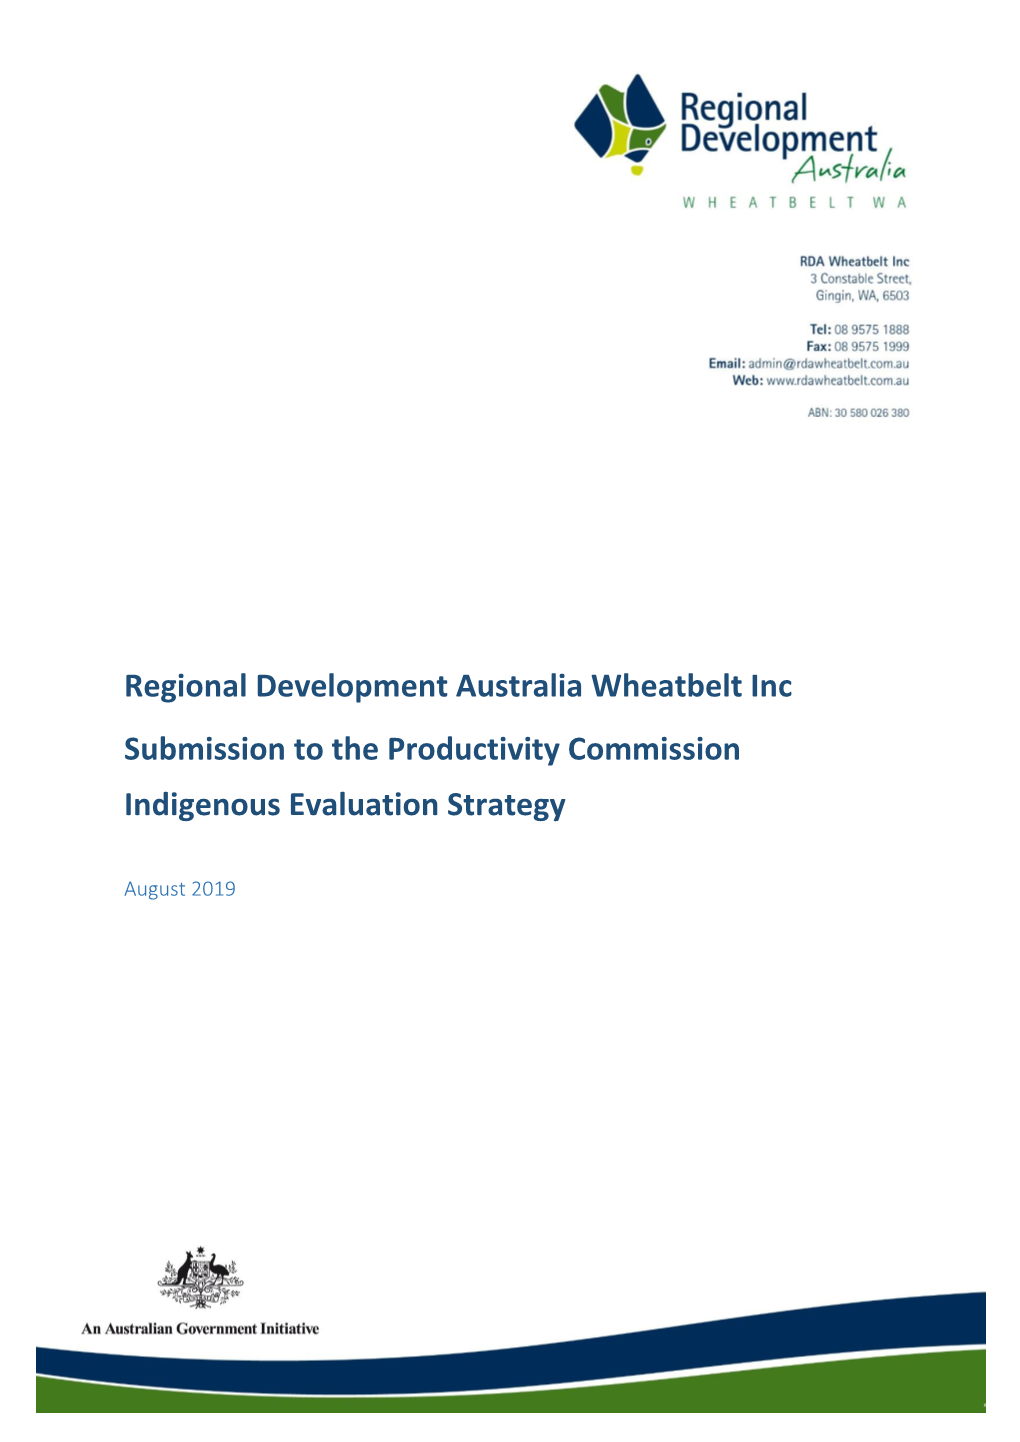 Regional Development Australia Wheatbelt WA